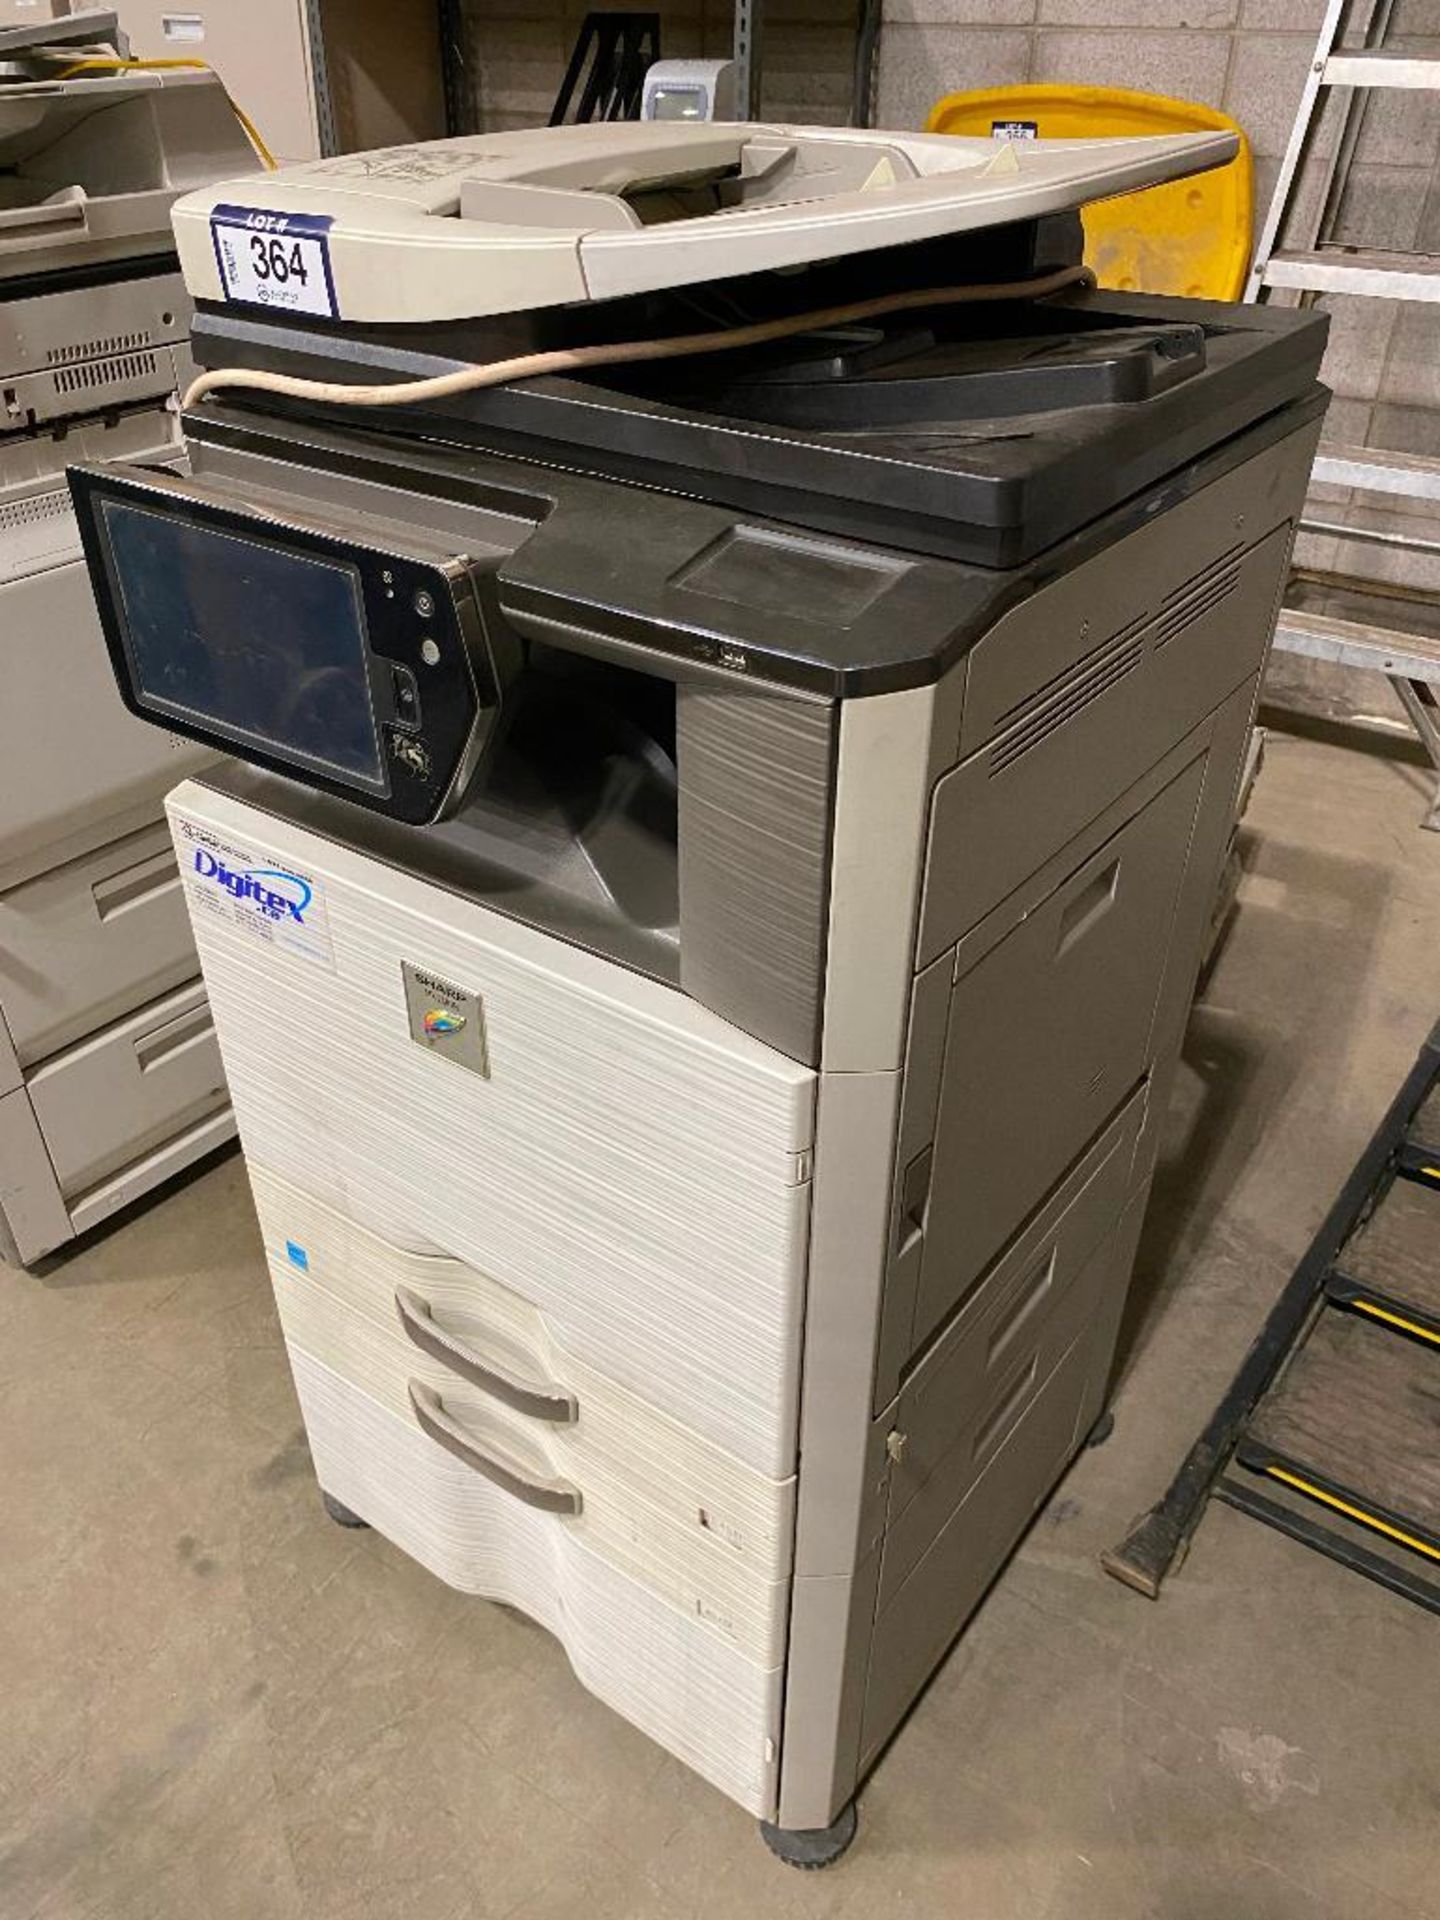 Sharp MX-2610N Printer/Copier - Image 2 of 3